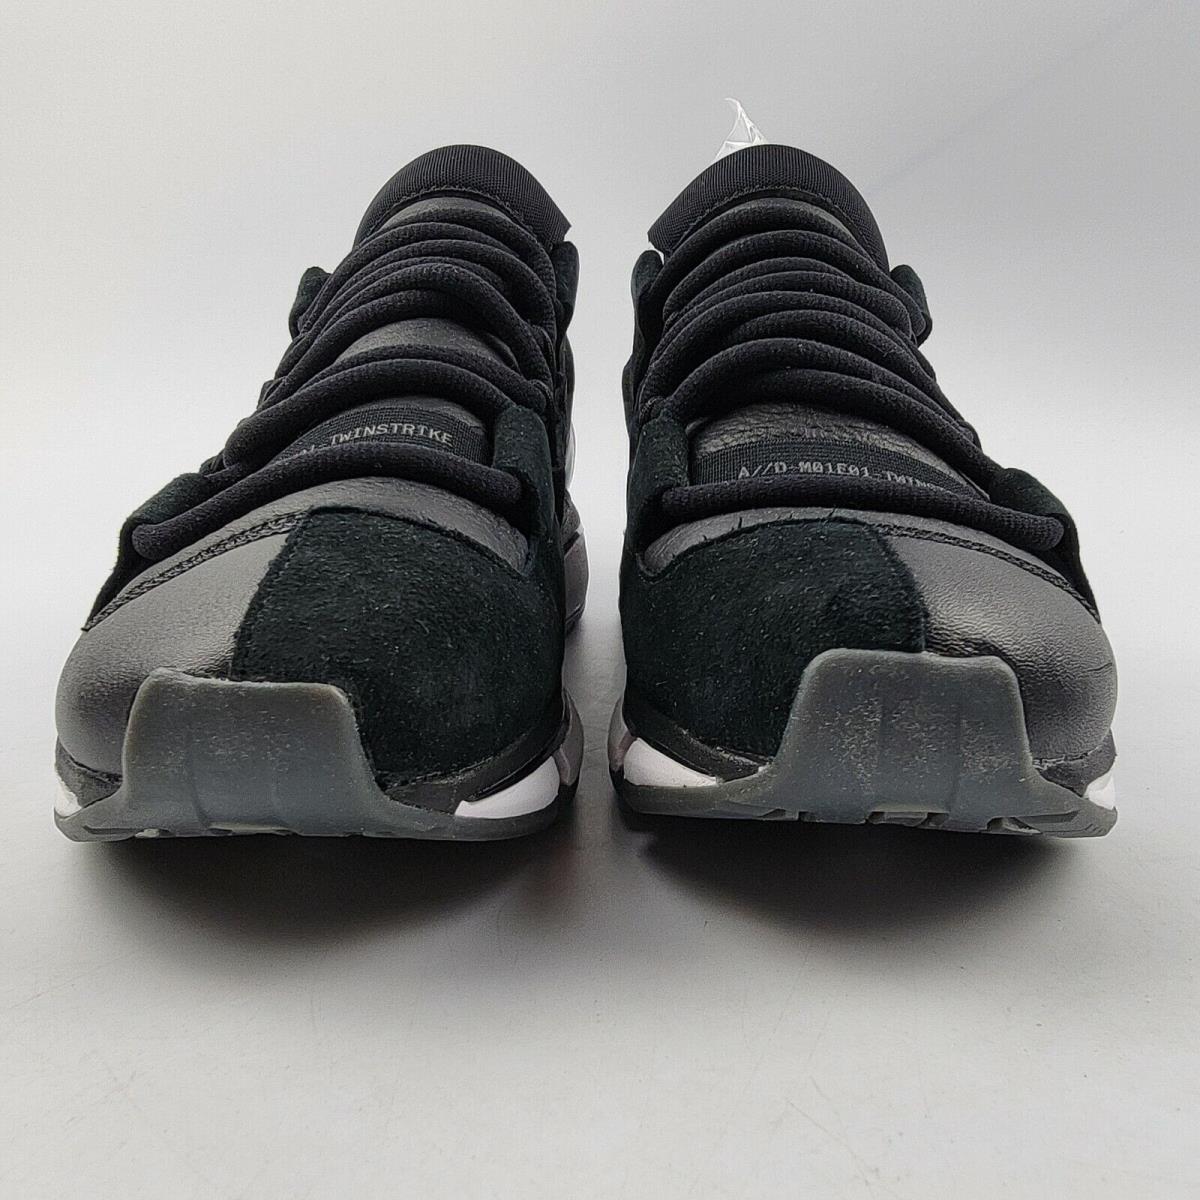 Peticionario Desplazamiento cazar Adidas Twinstrike Adv Stretch Leather Sneaker Shoes B28015 Mens 6 |  692740658421 - Adidas shoes Twinstrike ADV Stretch - Black | SporTipTop